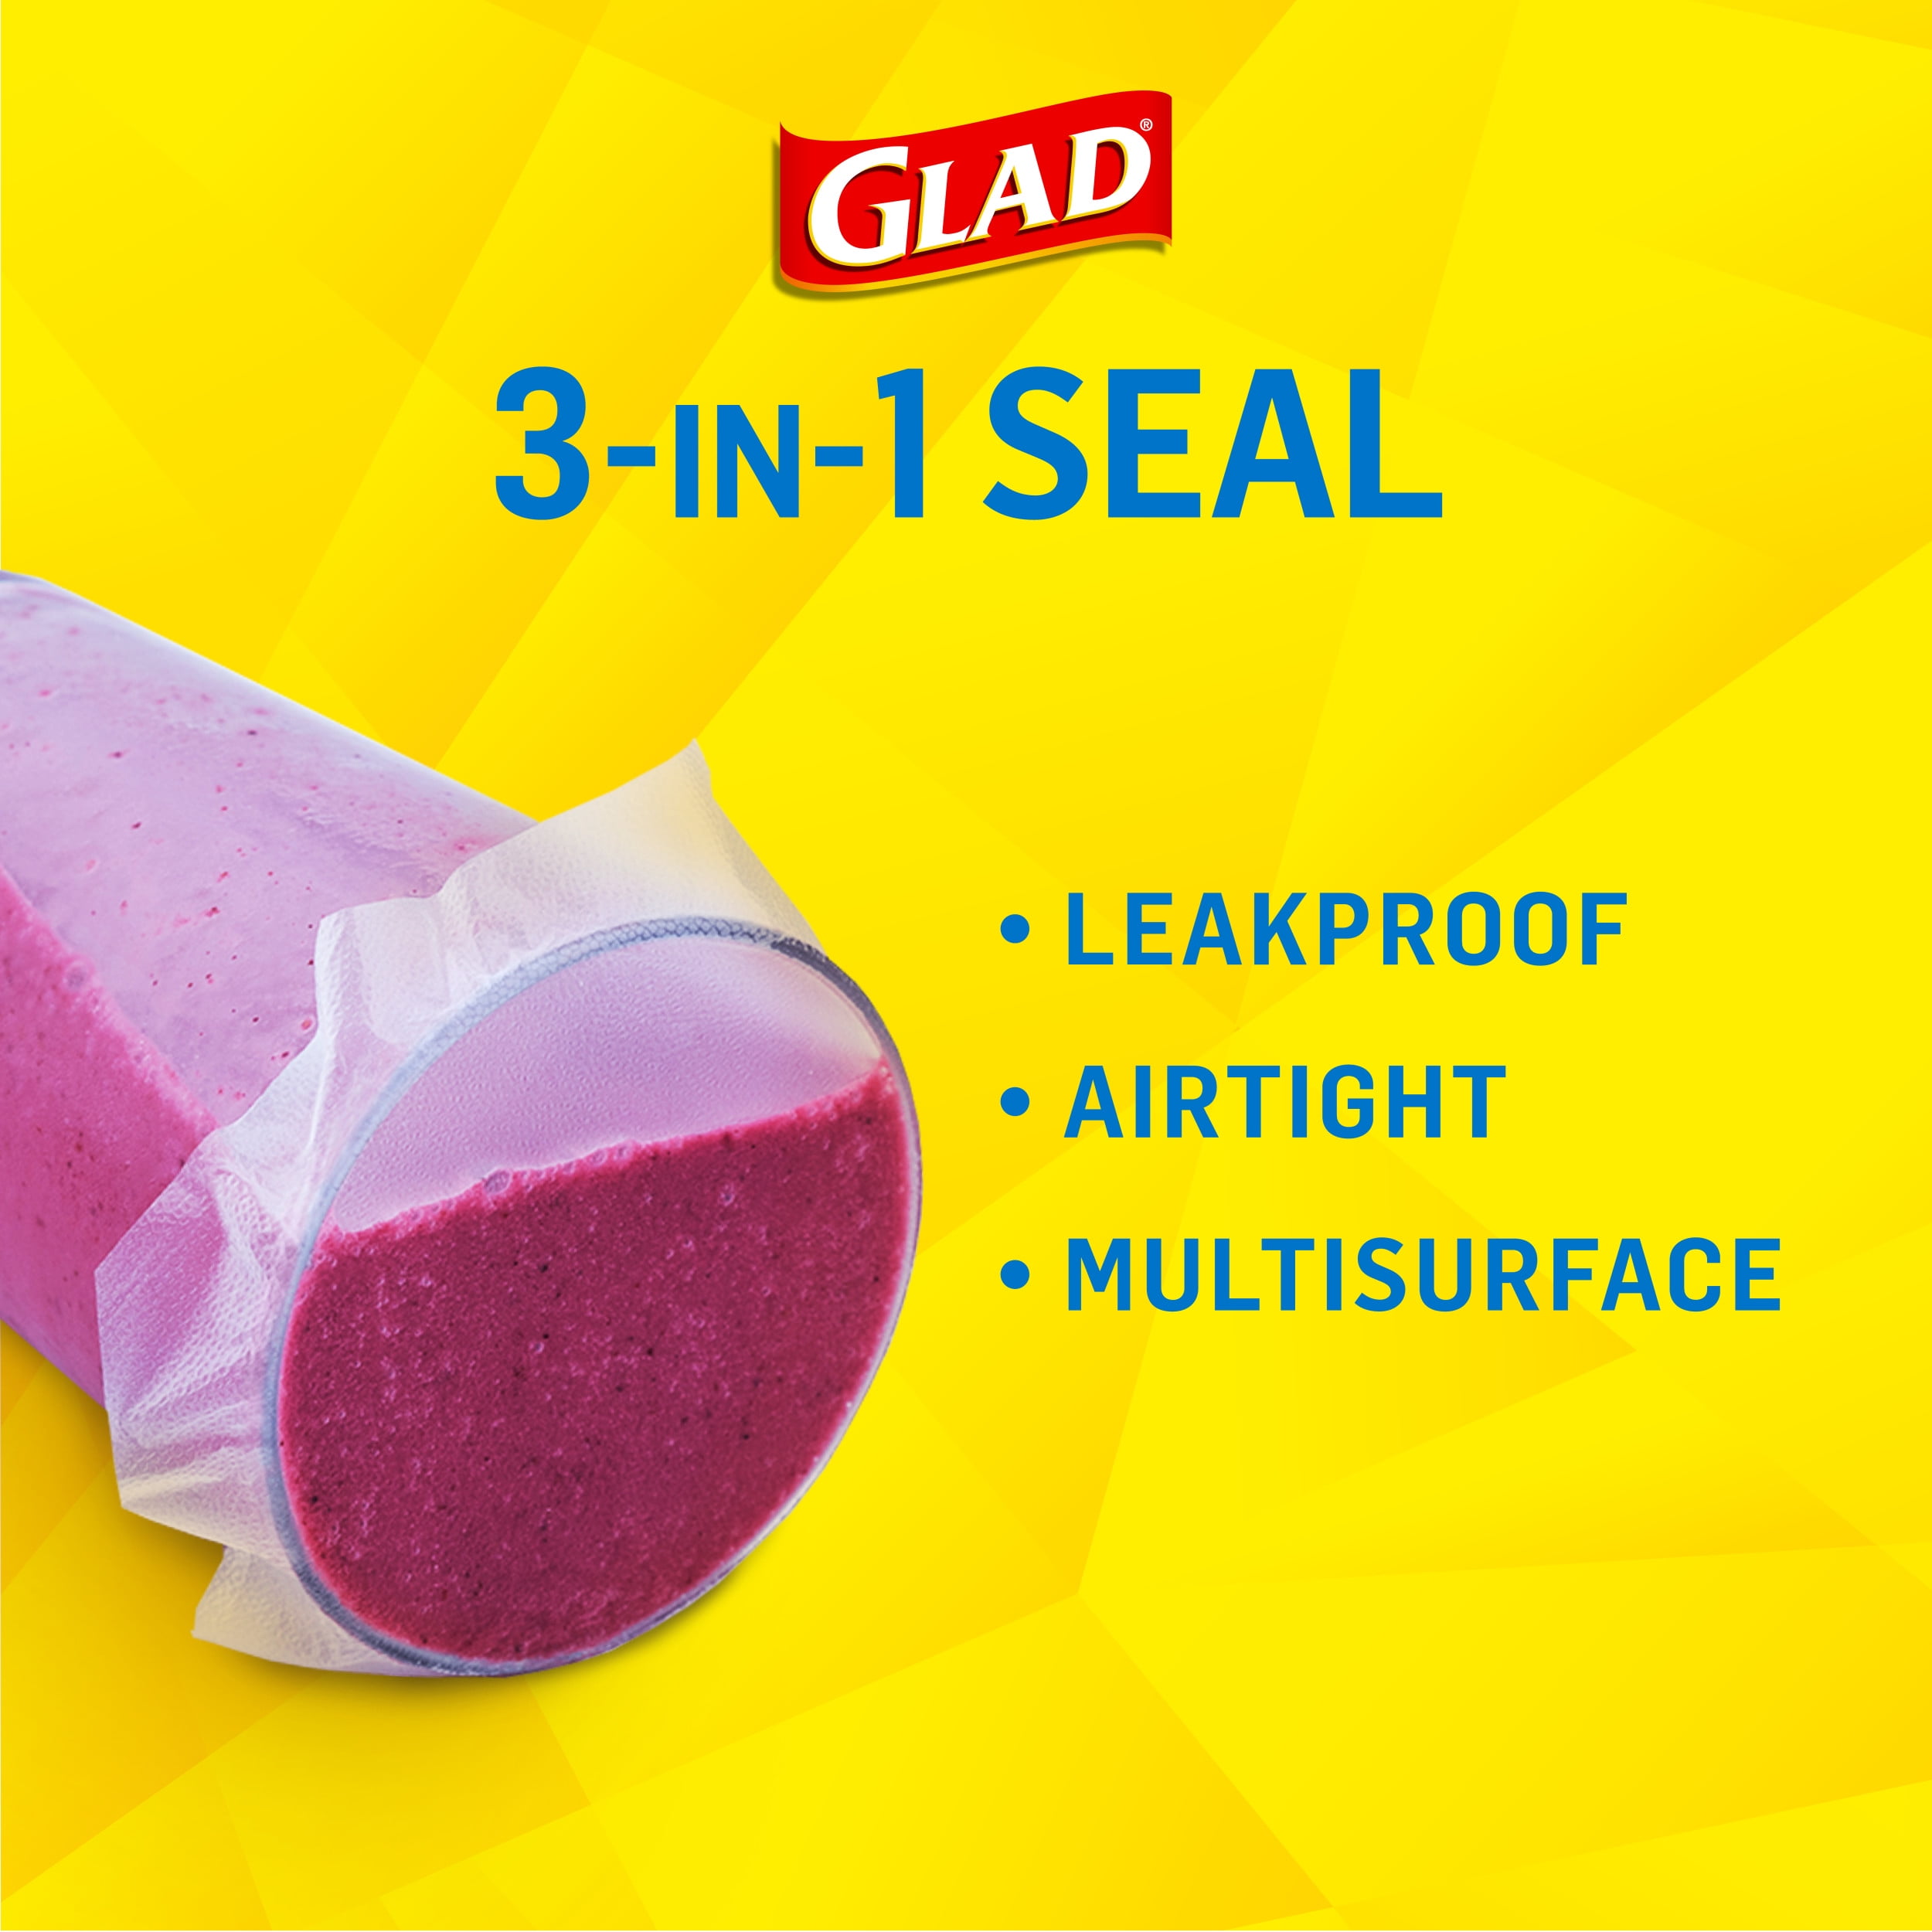 Glad Press 'n Seal Cling Wrap 70 sq ft (22 m)